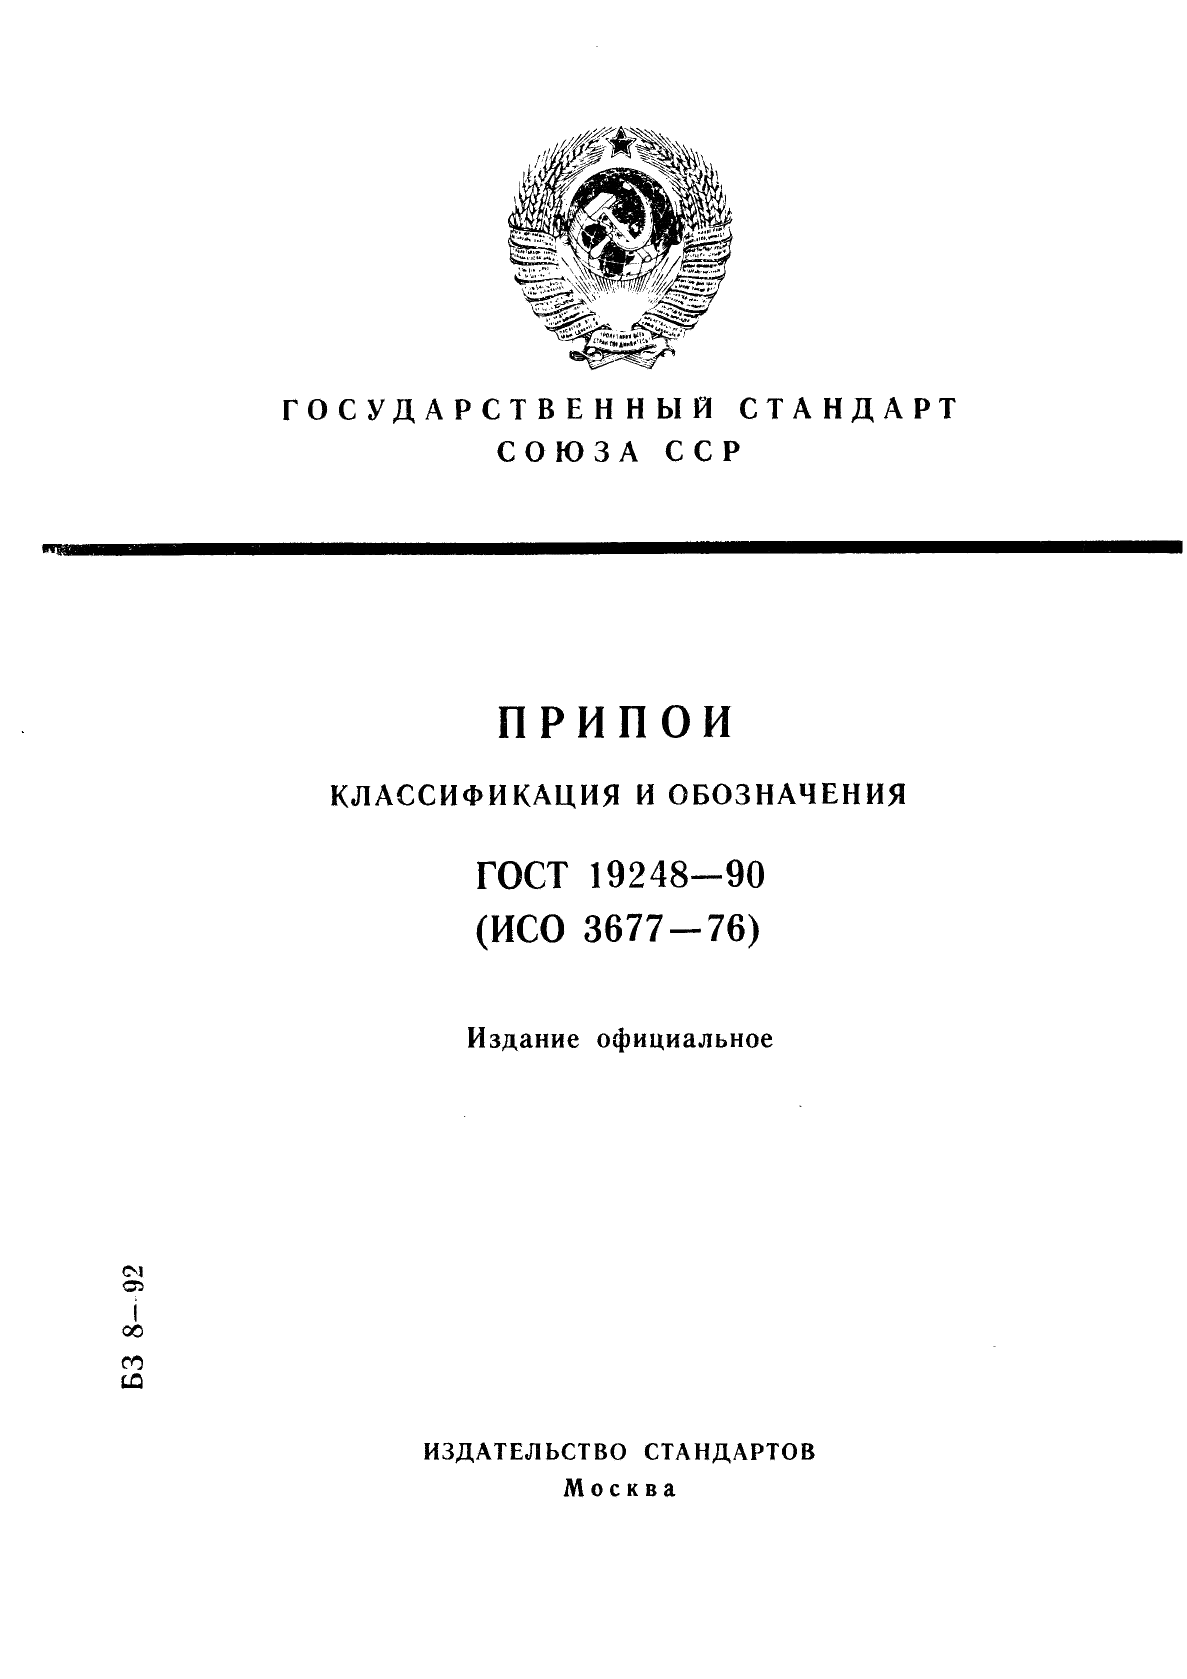 ГОСТ 19248-90 Припои. Классификация и обозначения (фото 1 из 7)